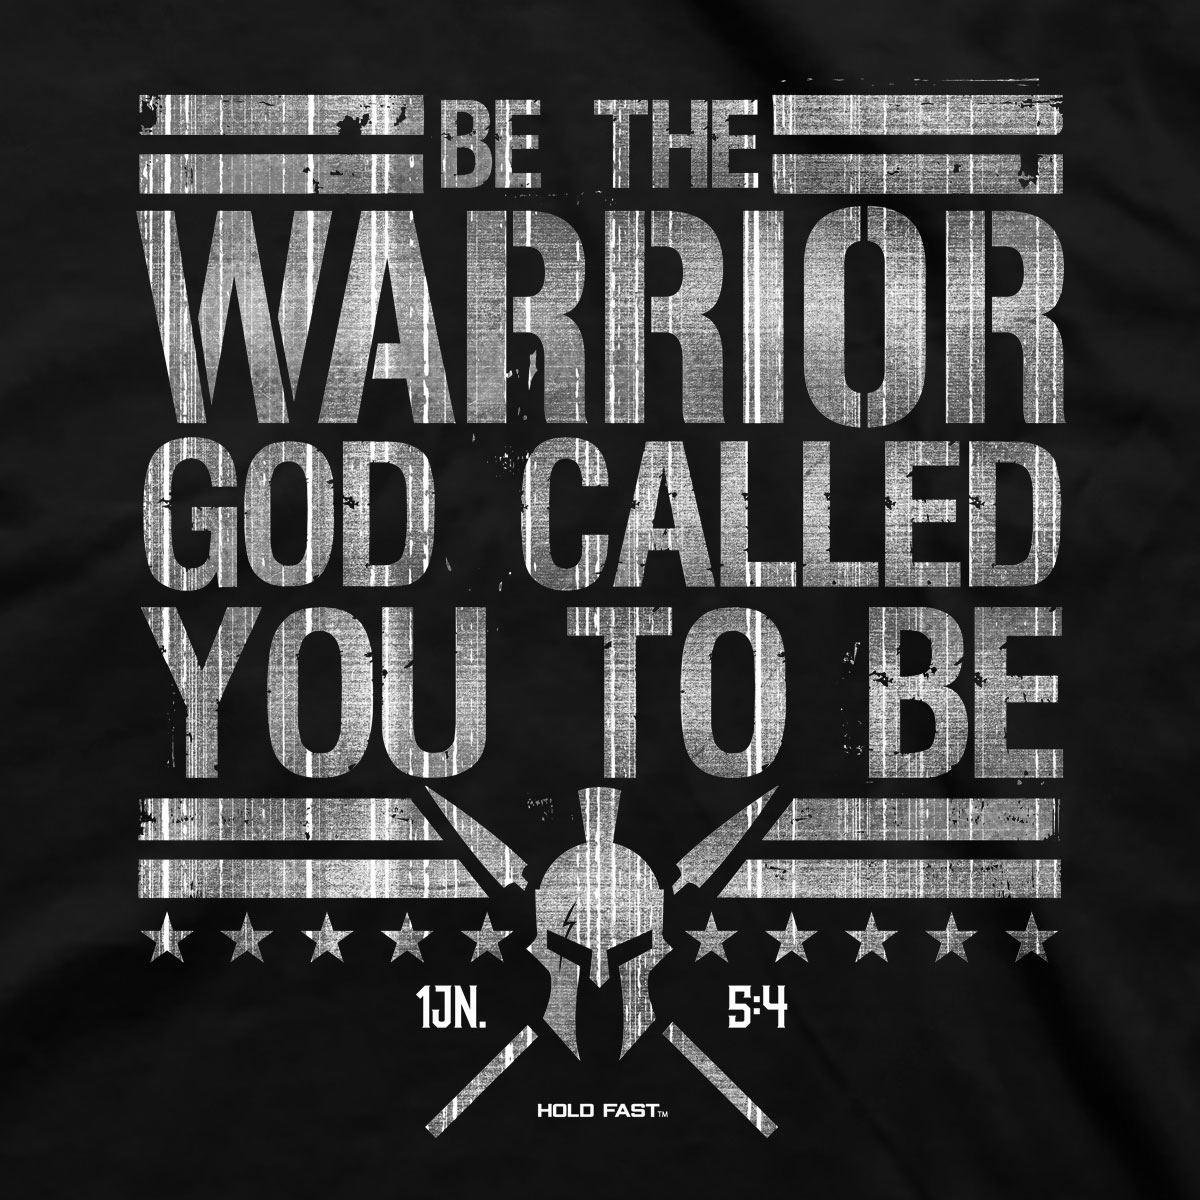 HOLD FAST Mens T-Shirt Warrior - Christian Spirit Wear